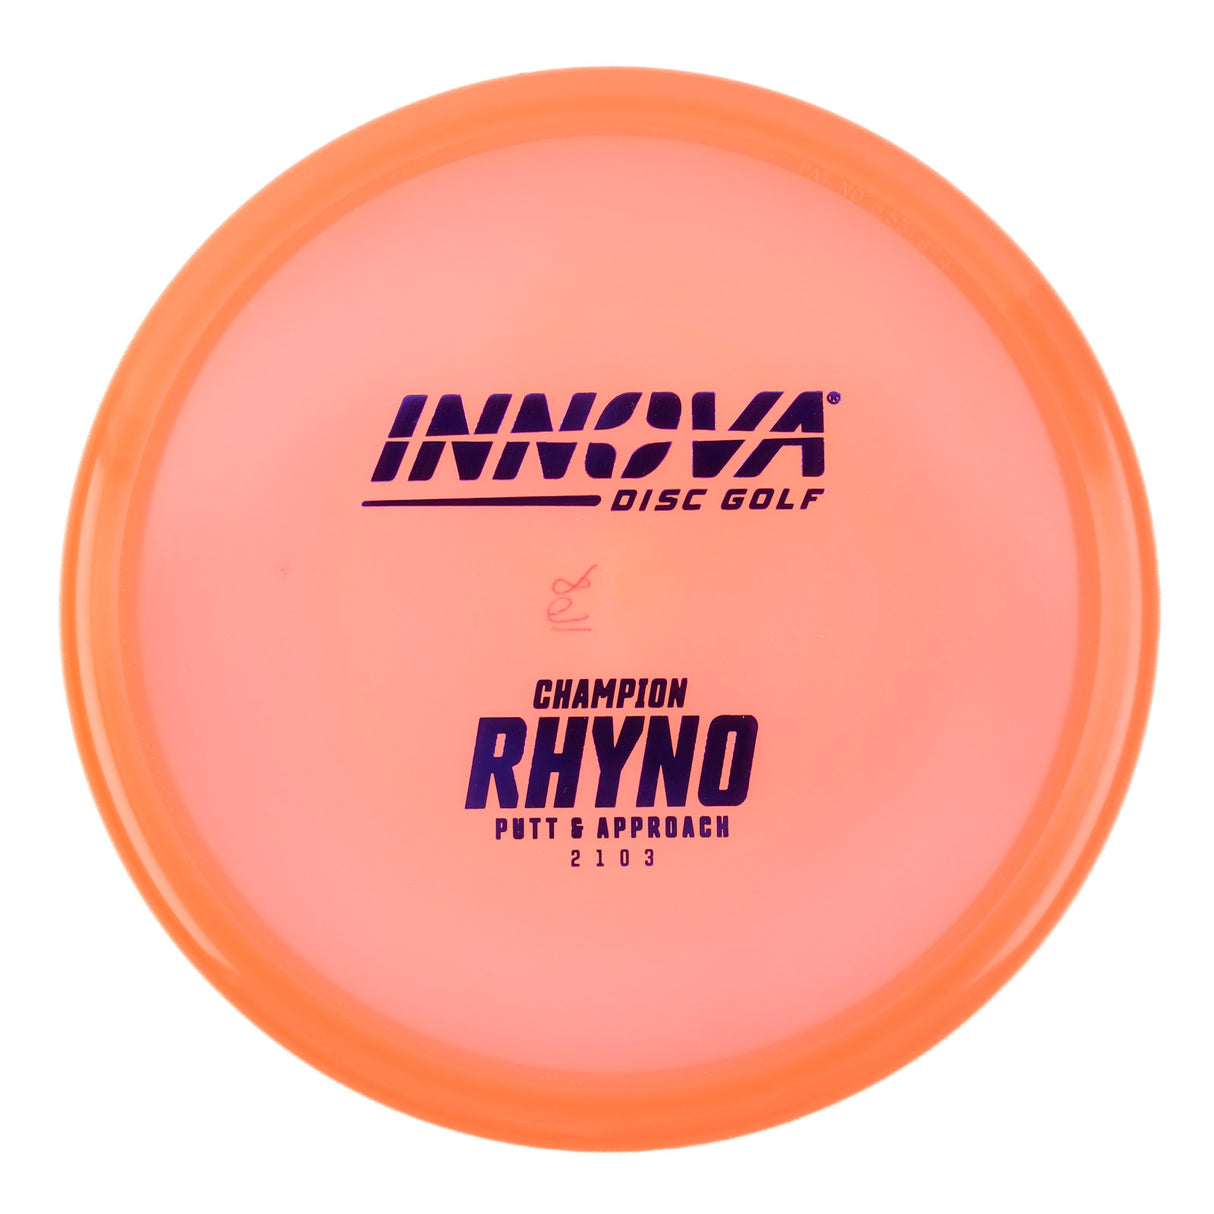 Innova Rhyno - Champion 169g | Style 0002